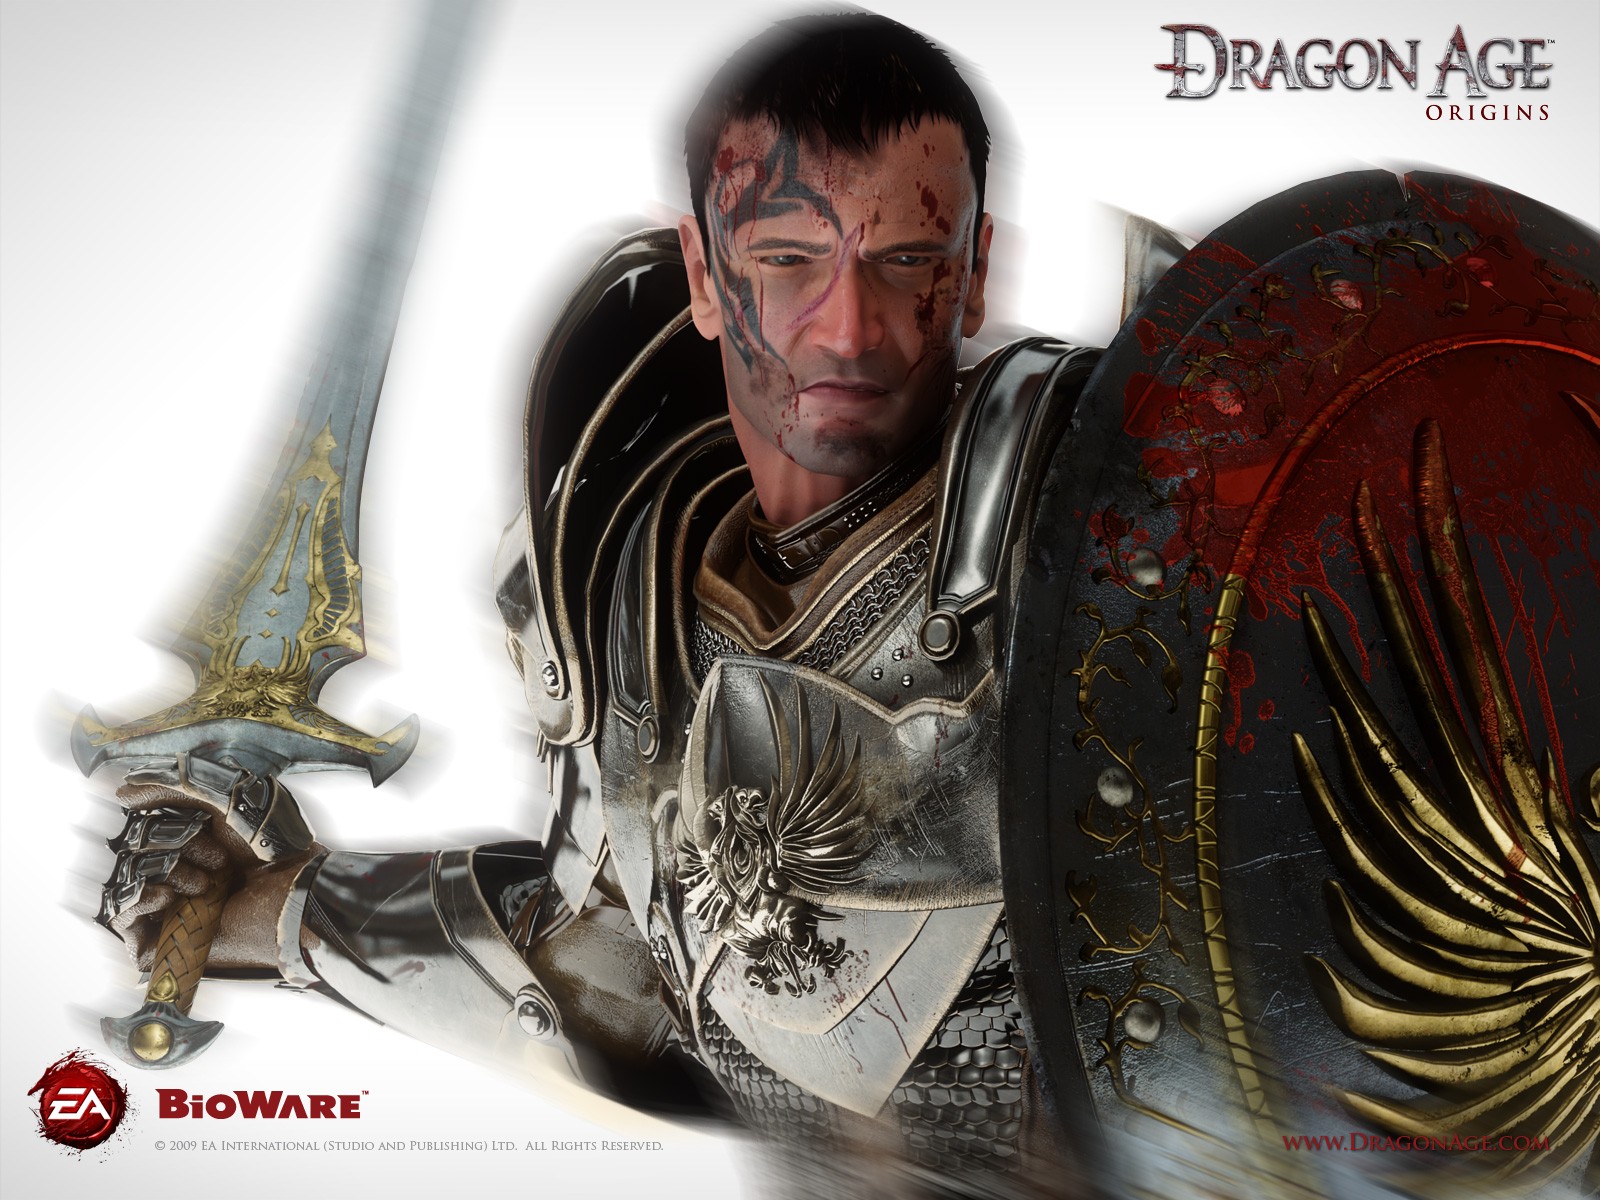 General 1600x1200 Dragon Age: Origins video games Bioware RPG PC gaming Electronic Arts sword shield armor video game men fantasy men simple background white background